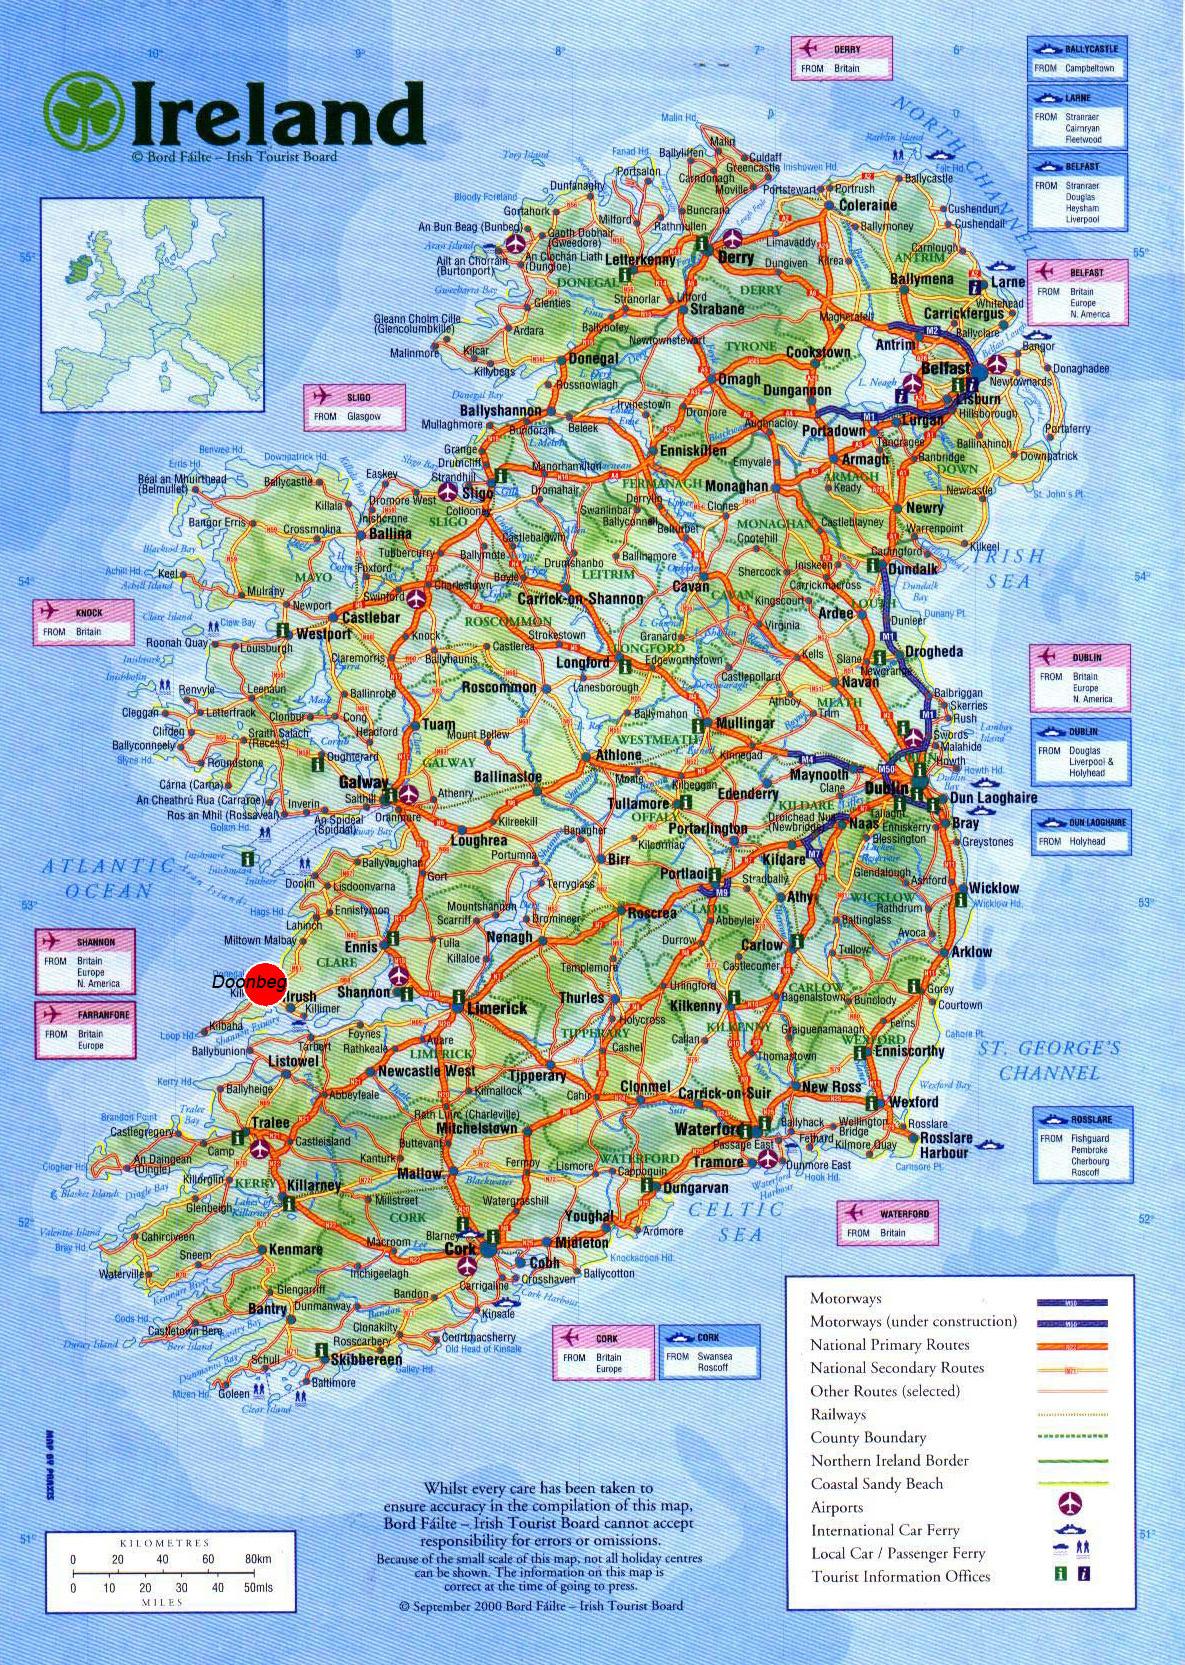 Ireland Tourist Attractions Map 